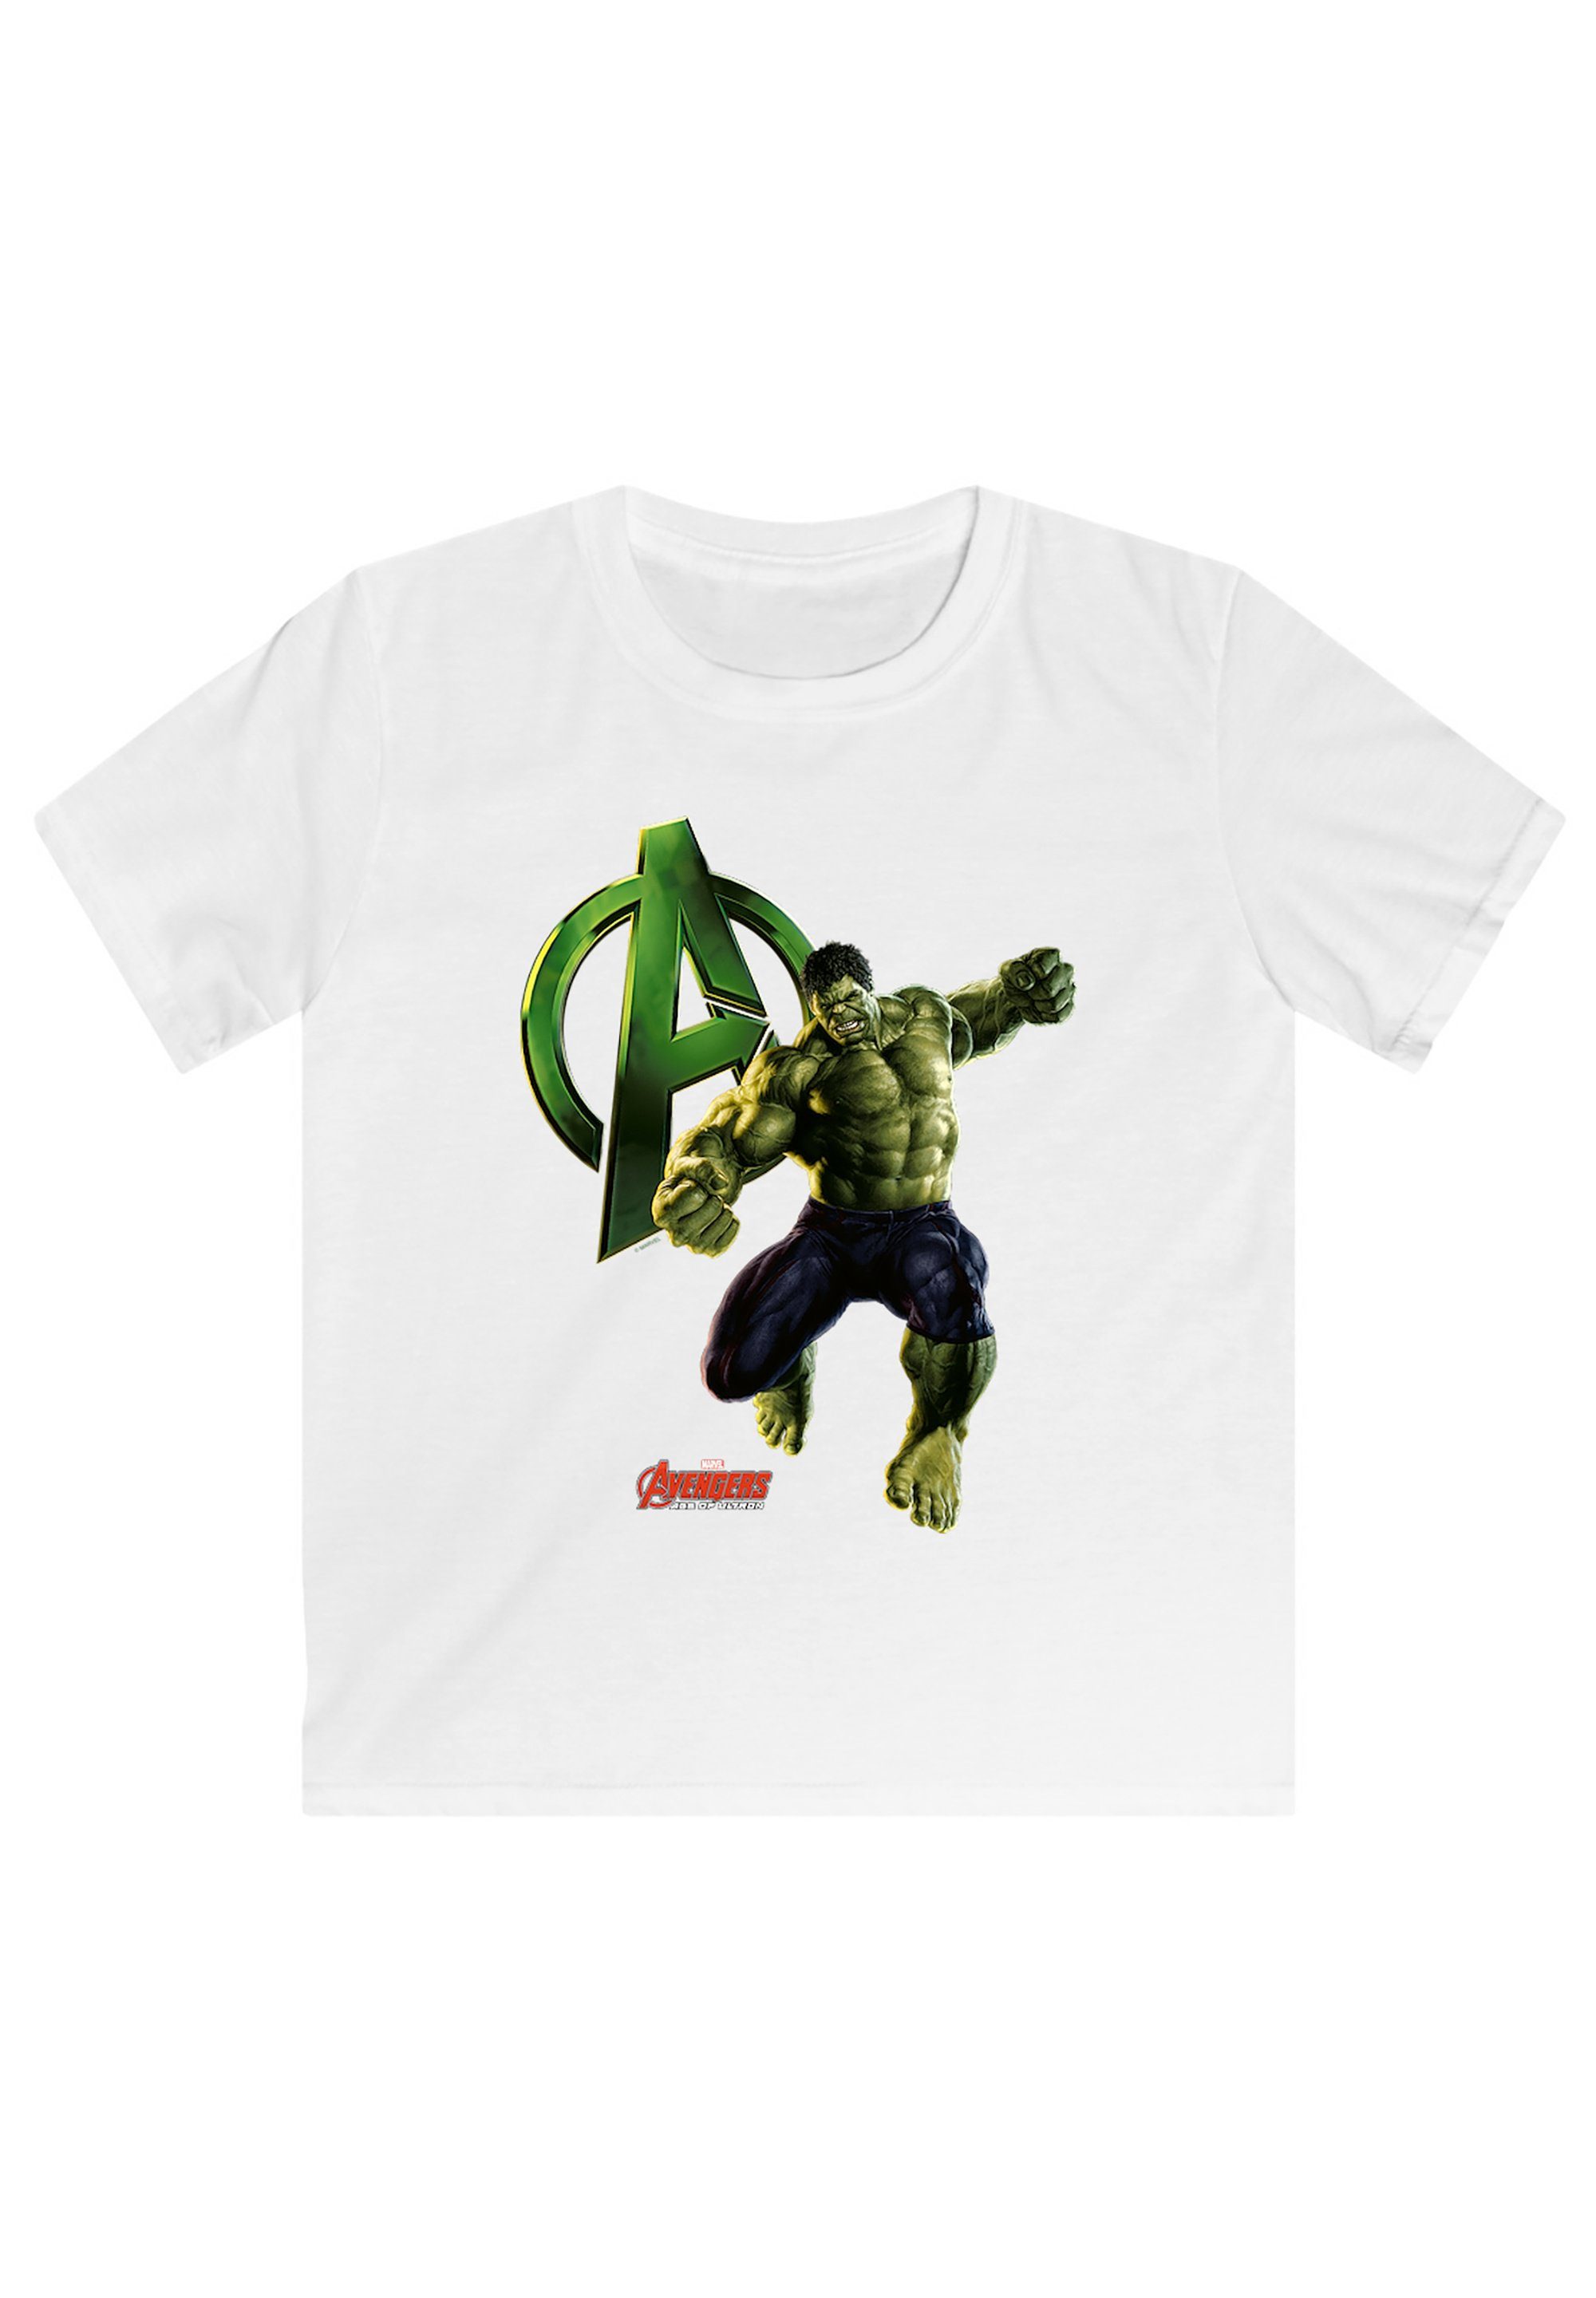 F4NT4STIC T-Shirt Marvel Avengers Age weicher Baumwollstoff mit hohem Print, Hulk Sehr Incredible of Tragekomfort Ultron